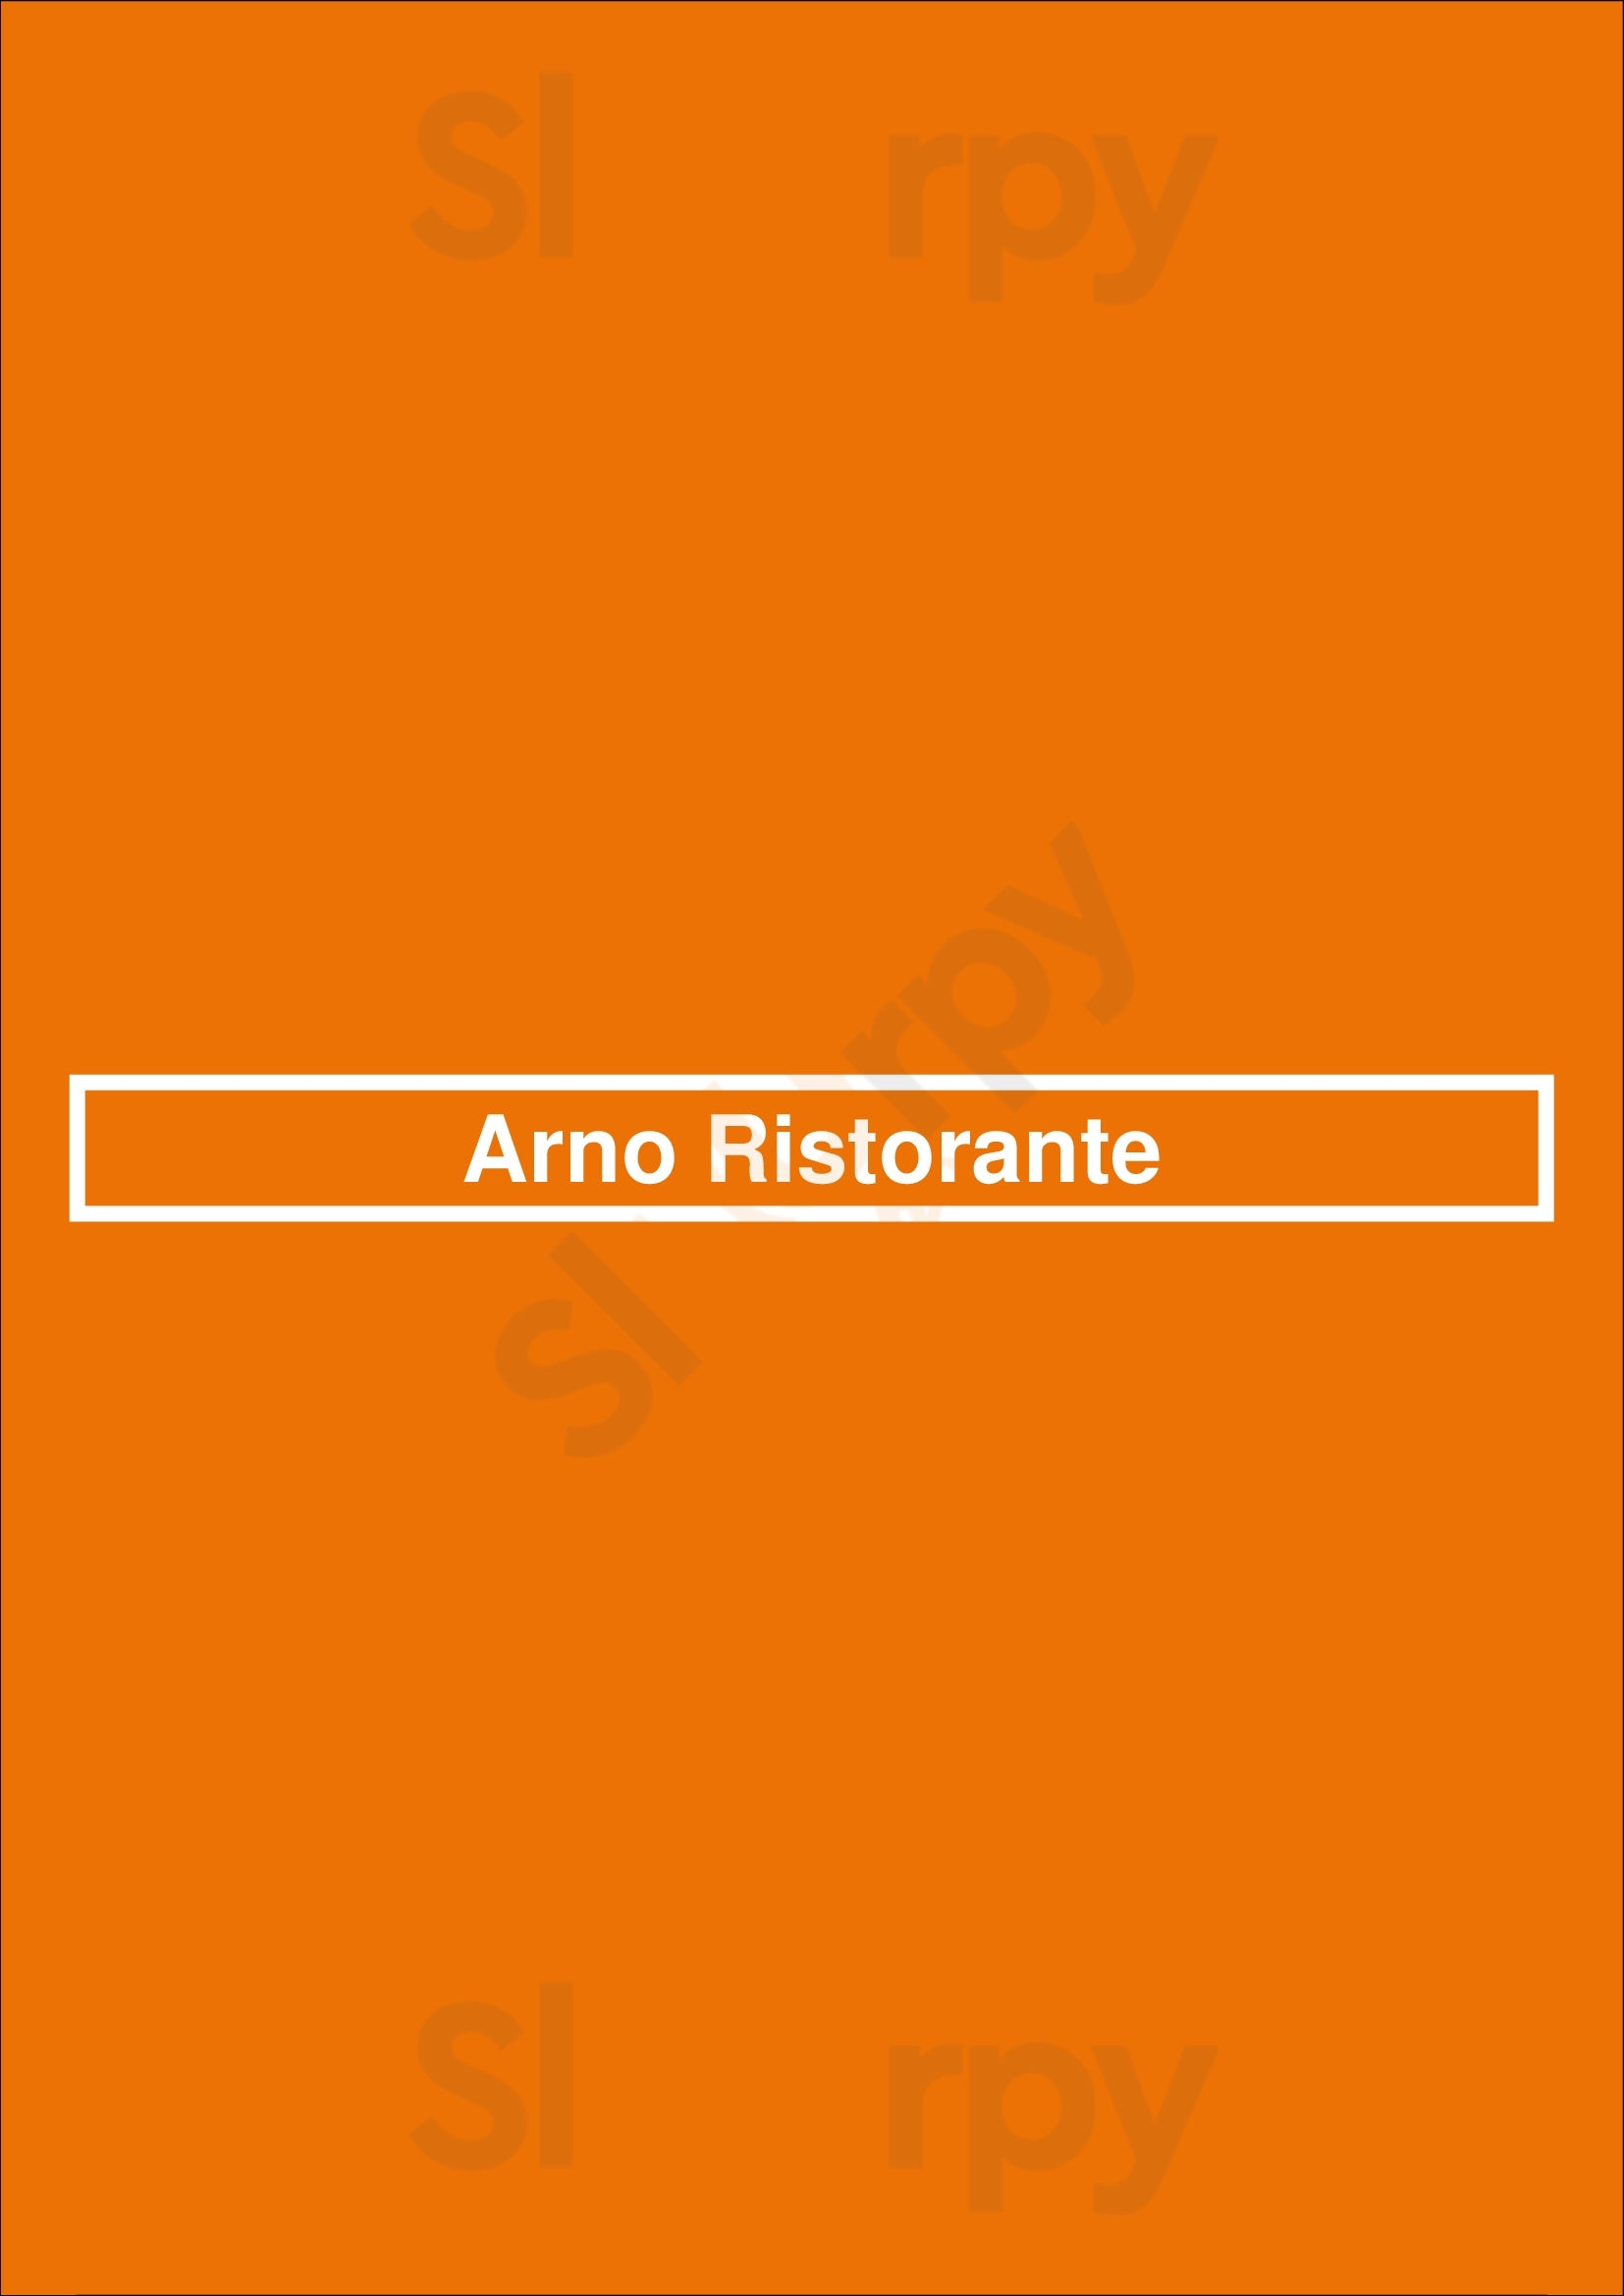 Arno Ristorante New York City Menu - 1